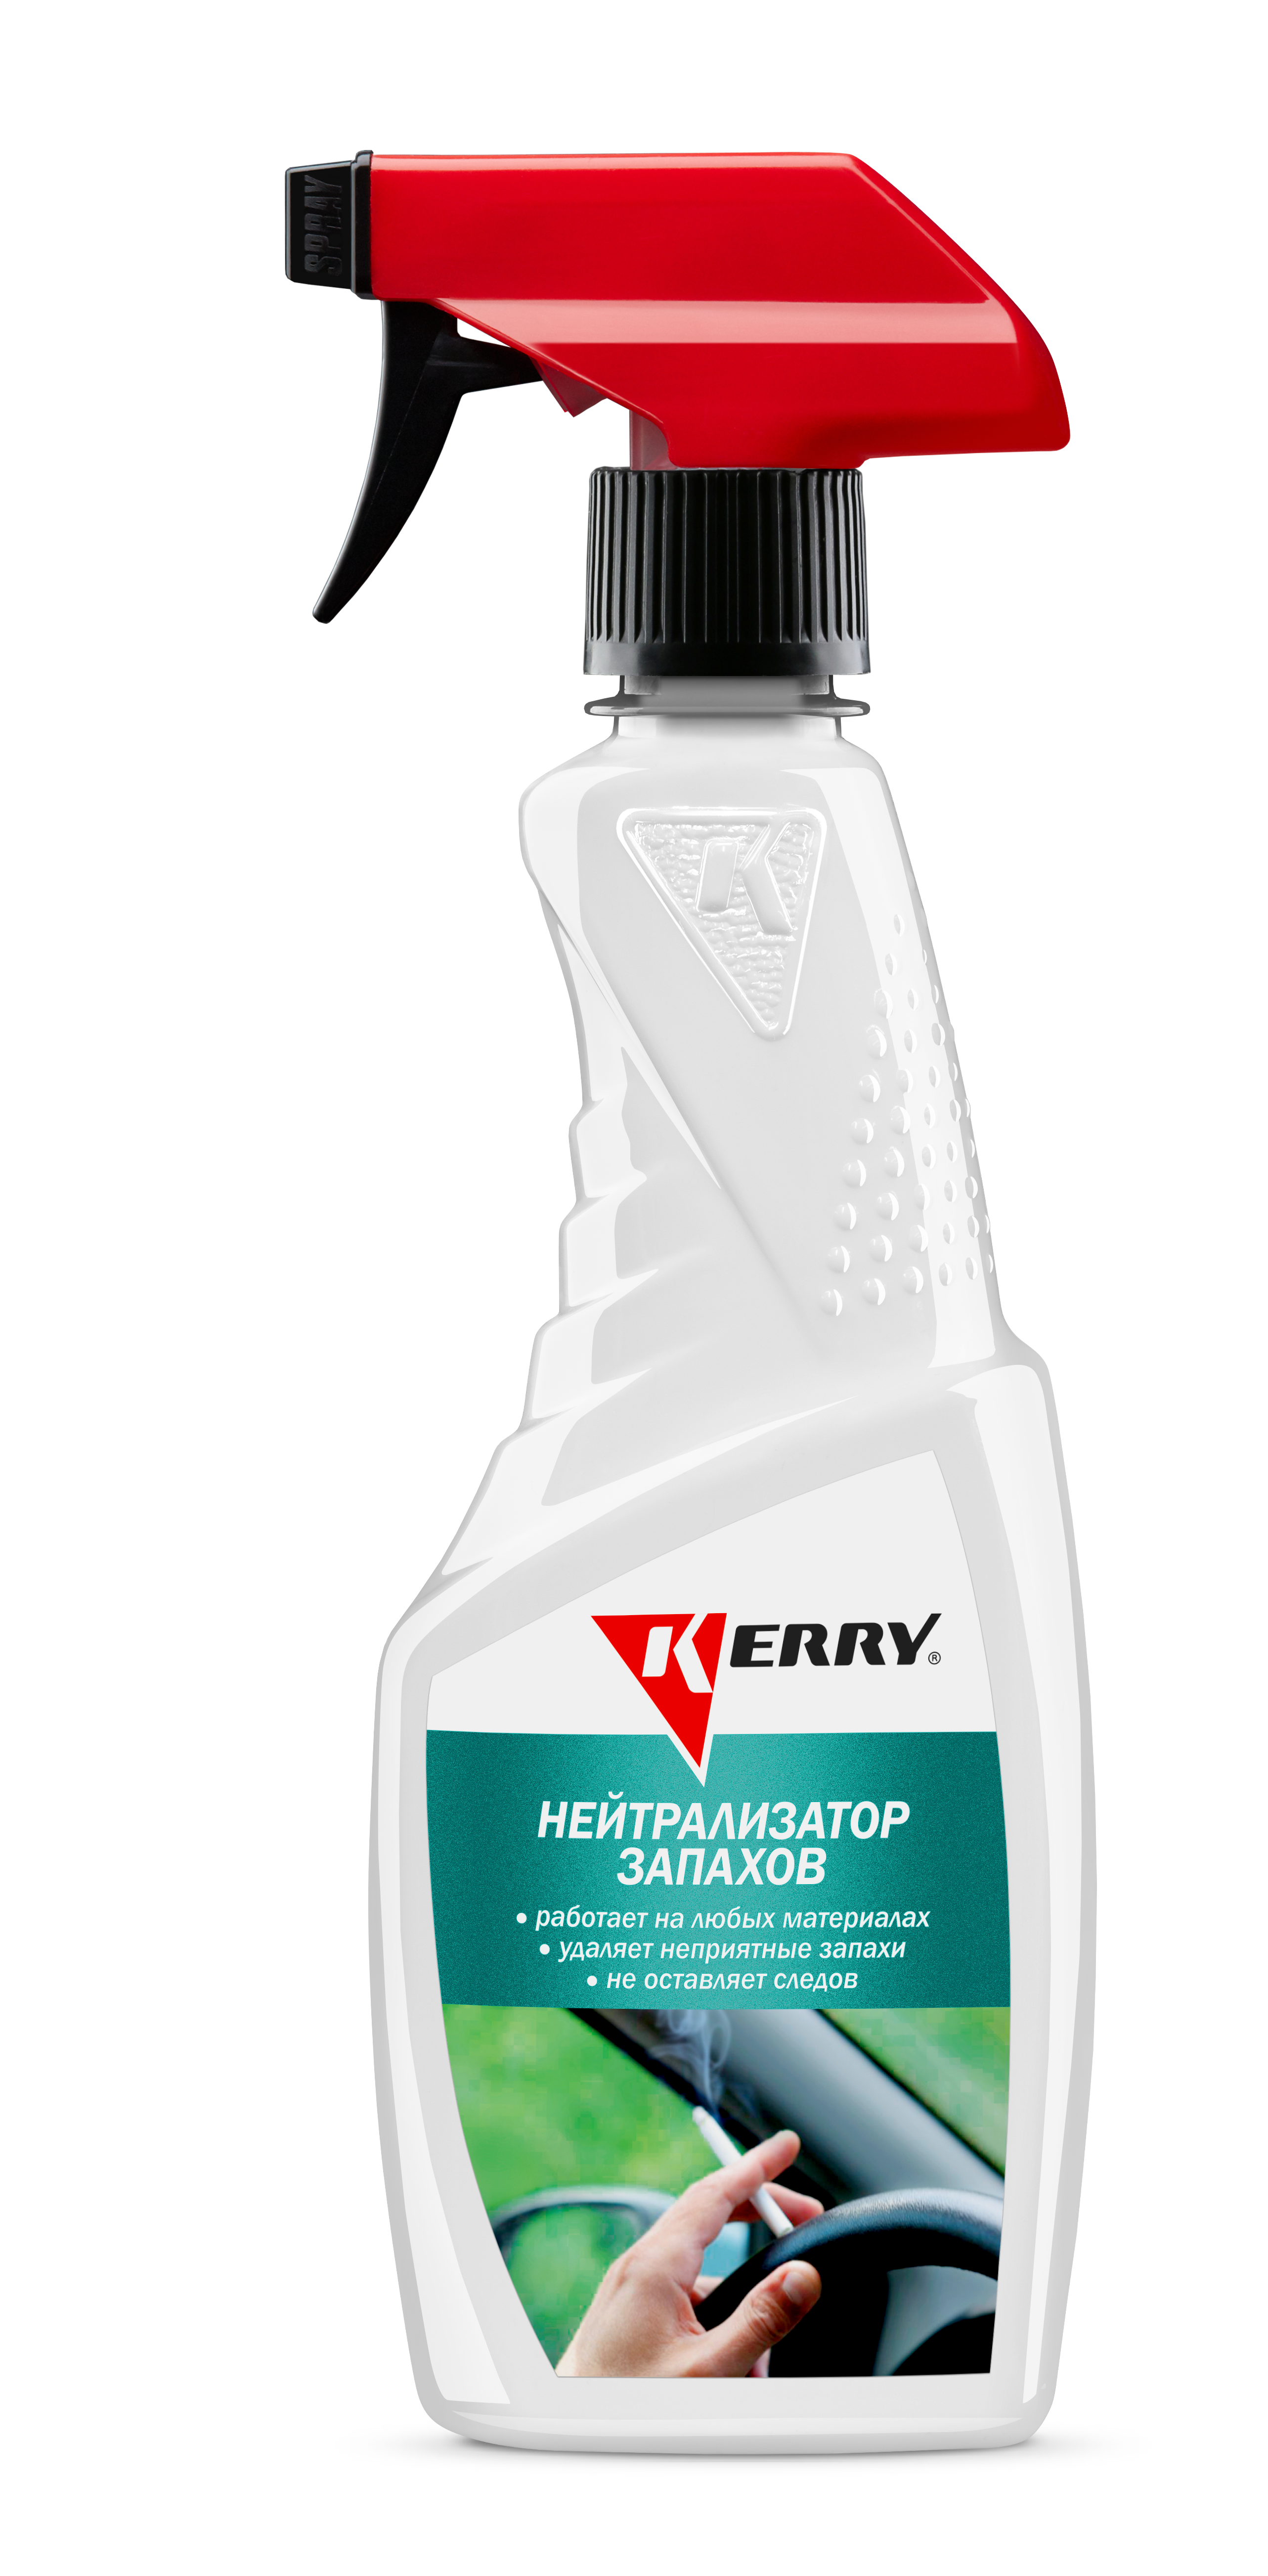 Нейтрализатор запахов Kerry KR-518